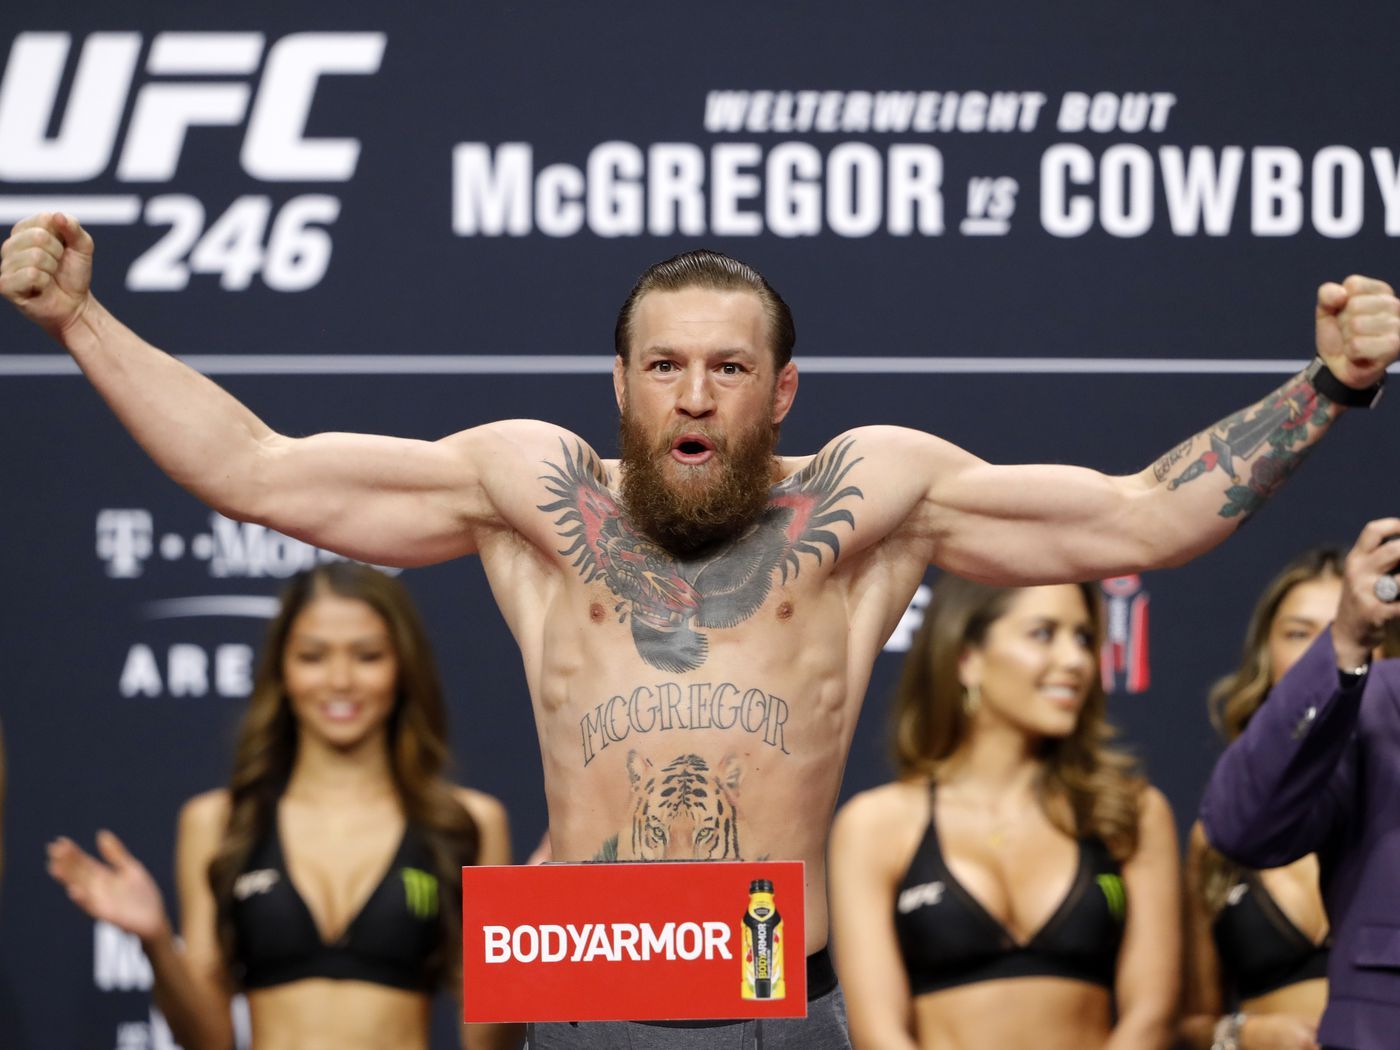 How to watch UFC 246: 'McGregor vs Cowboy' TONIGHT live on ESPN+